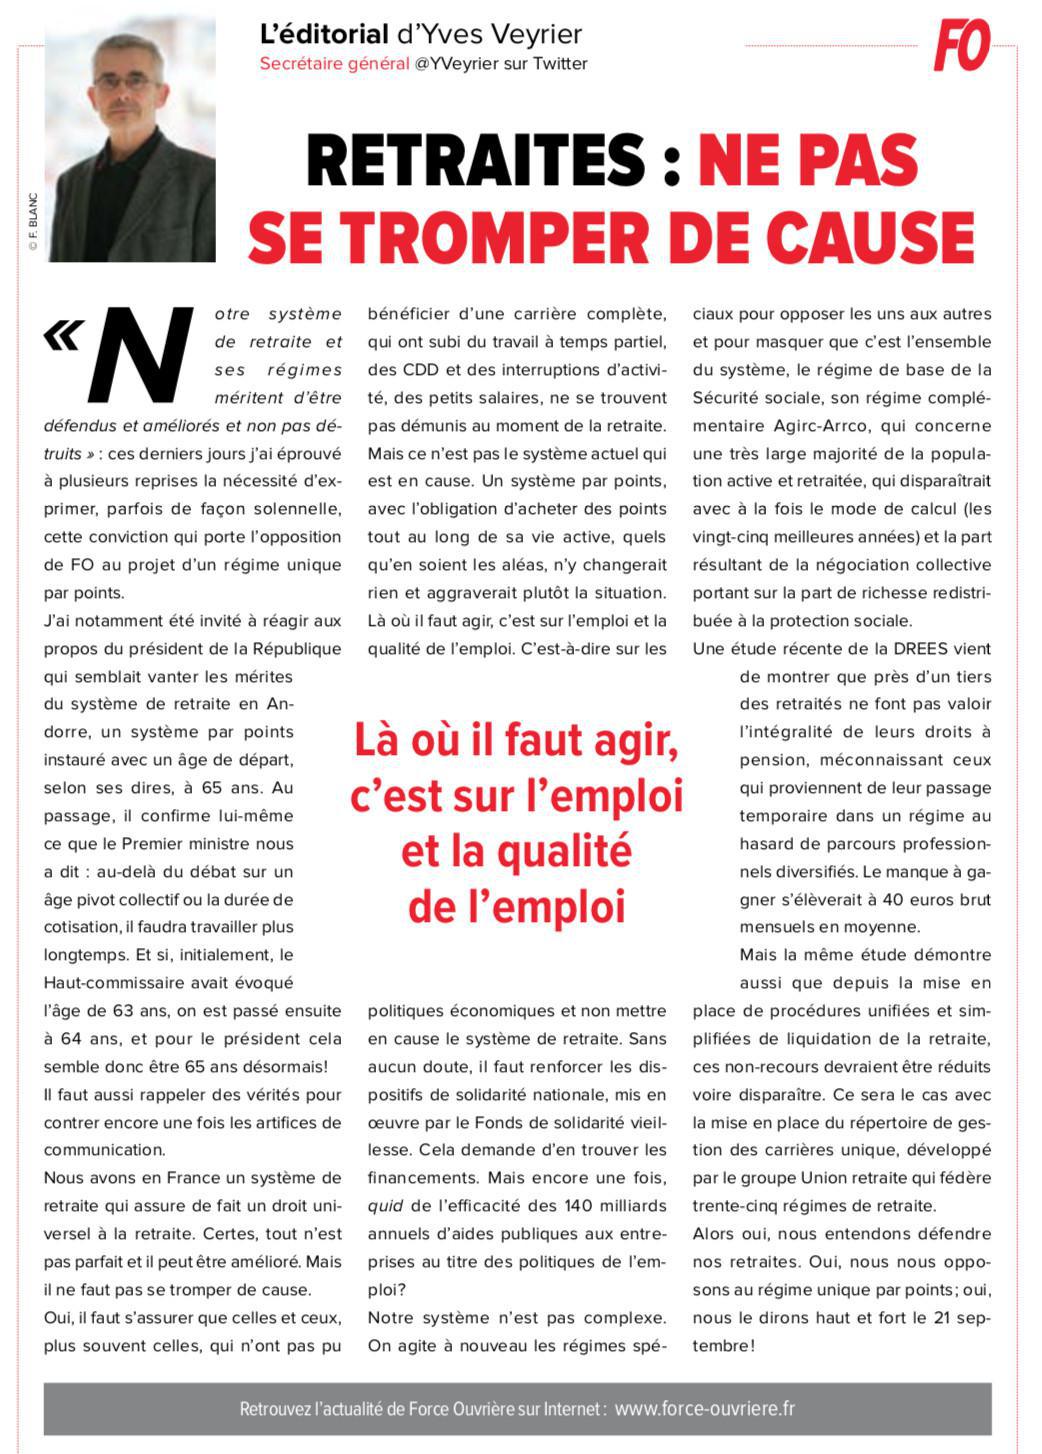 L'Editorial D'Yves Veyrier, Secrétaire Général FO